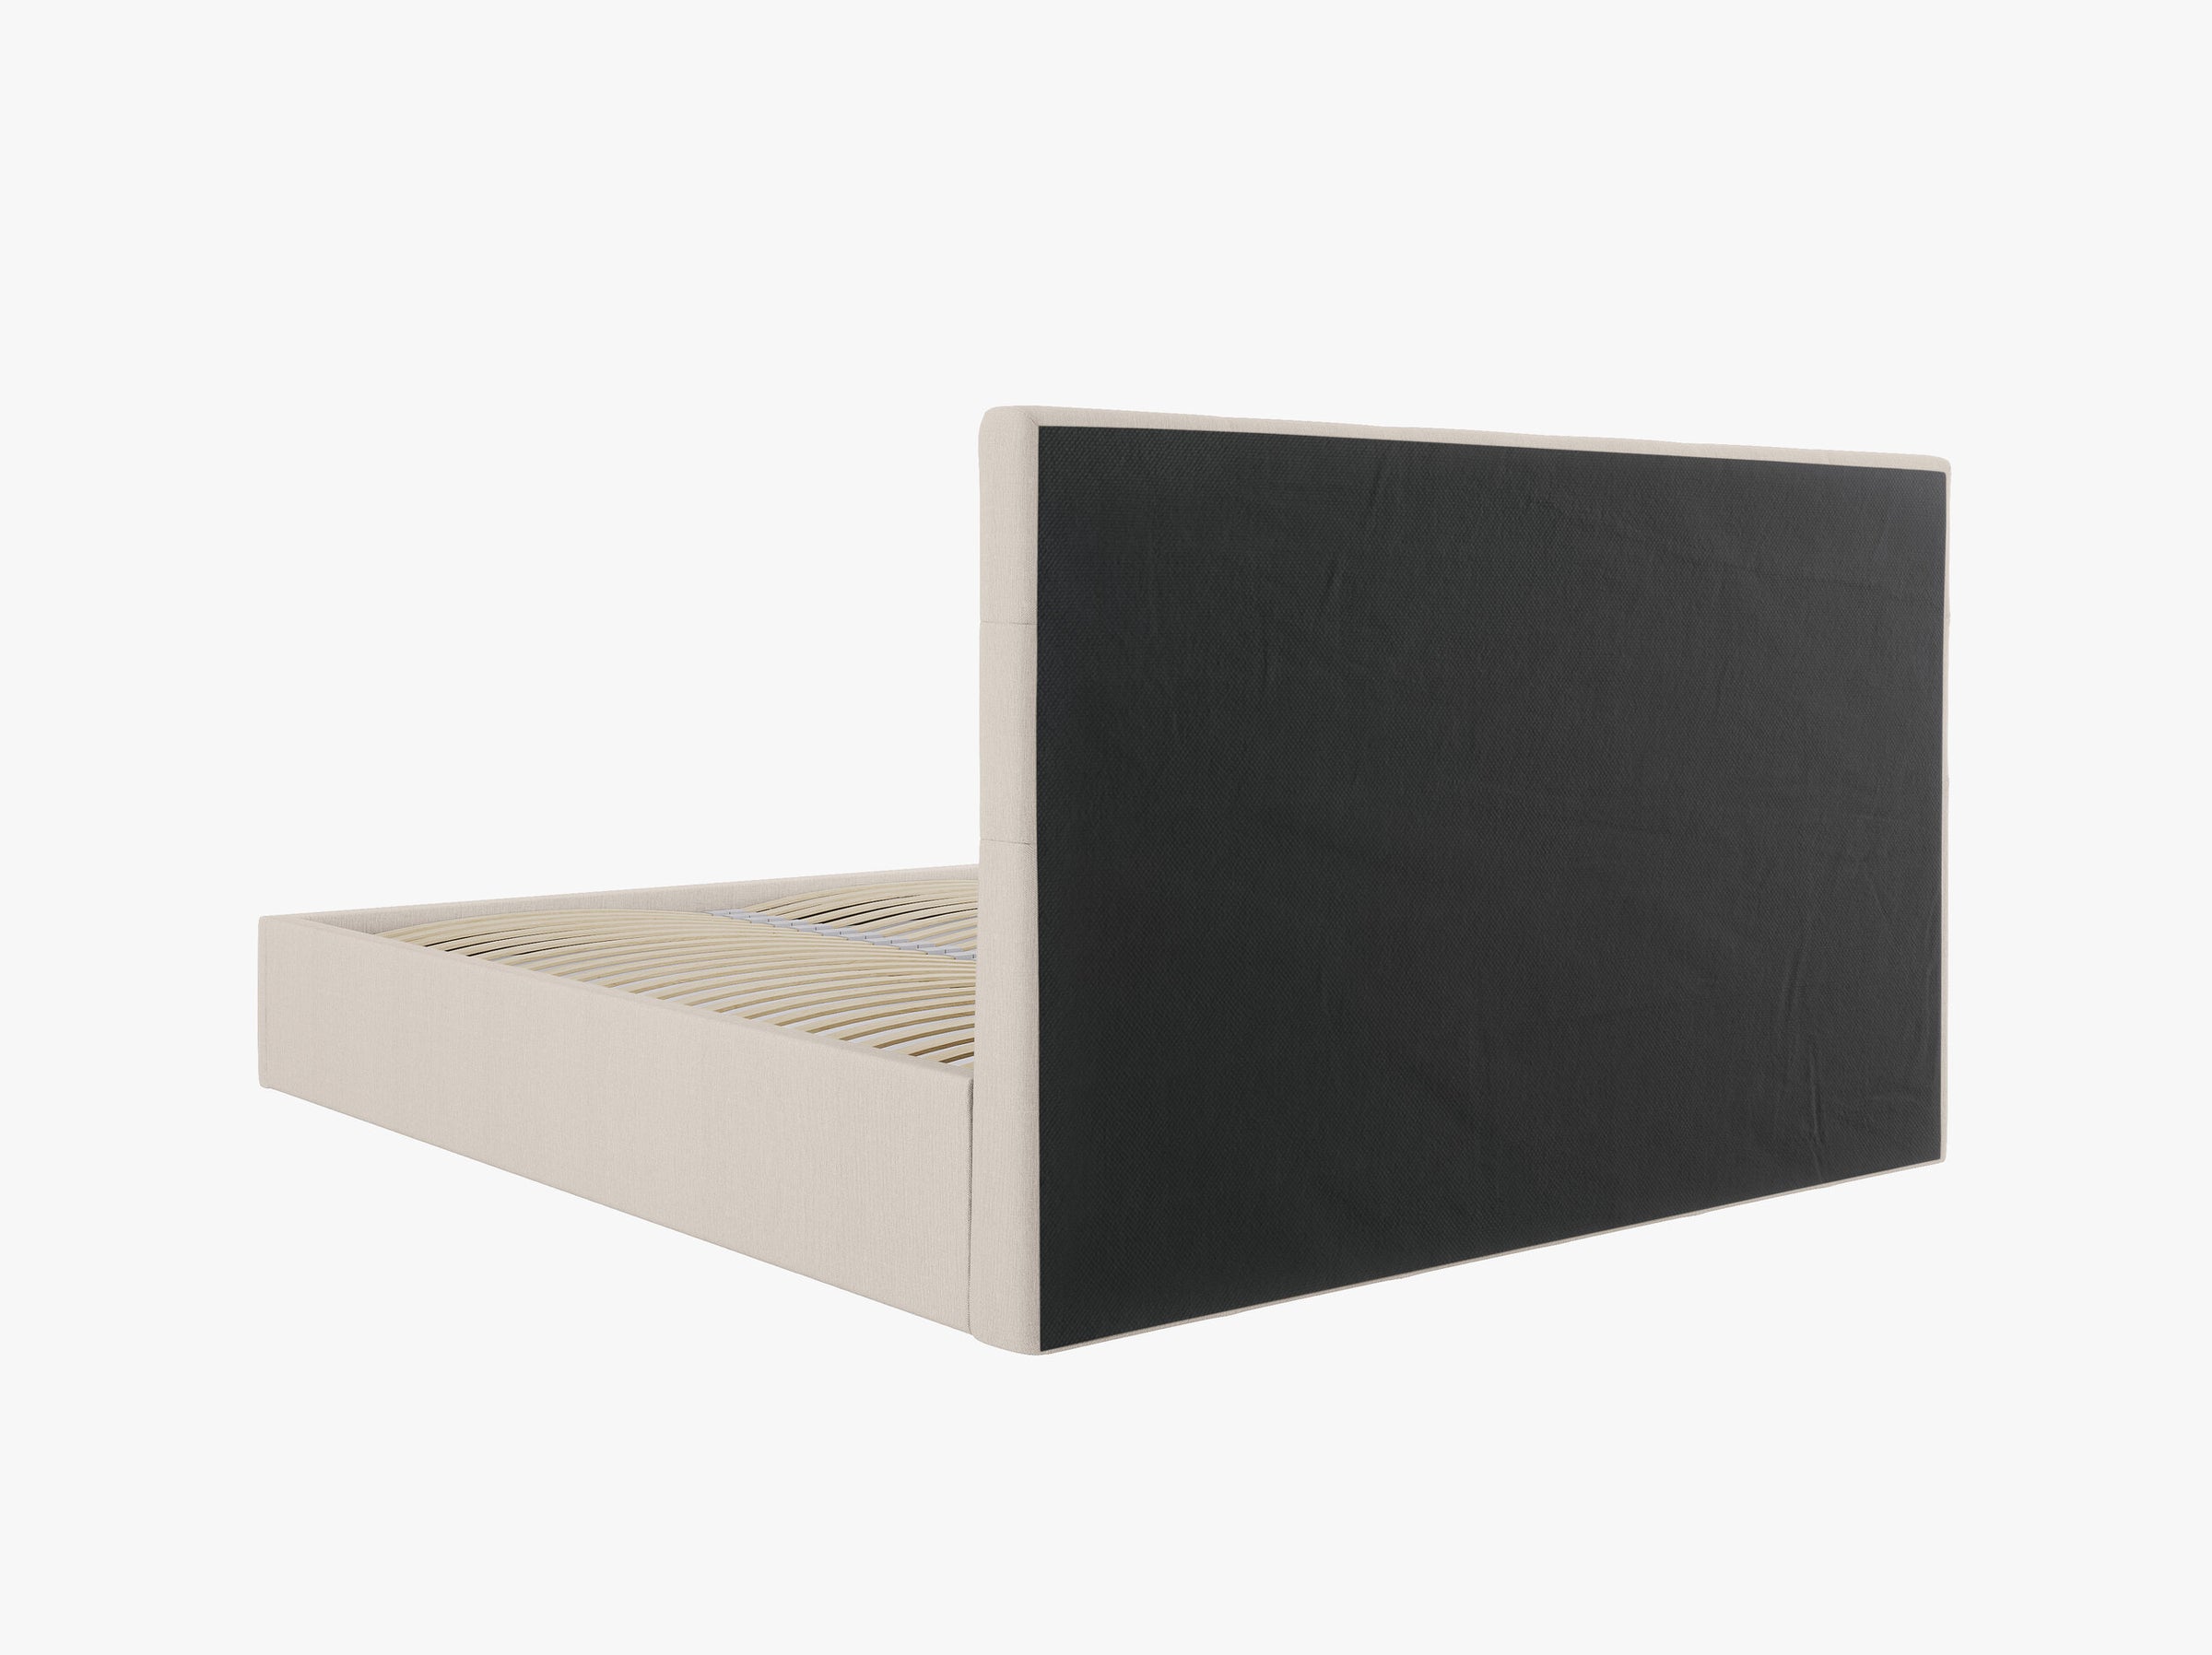 Phaedra beds & mattresses structured fabric beige